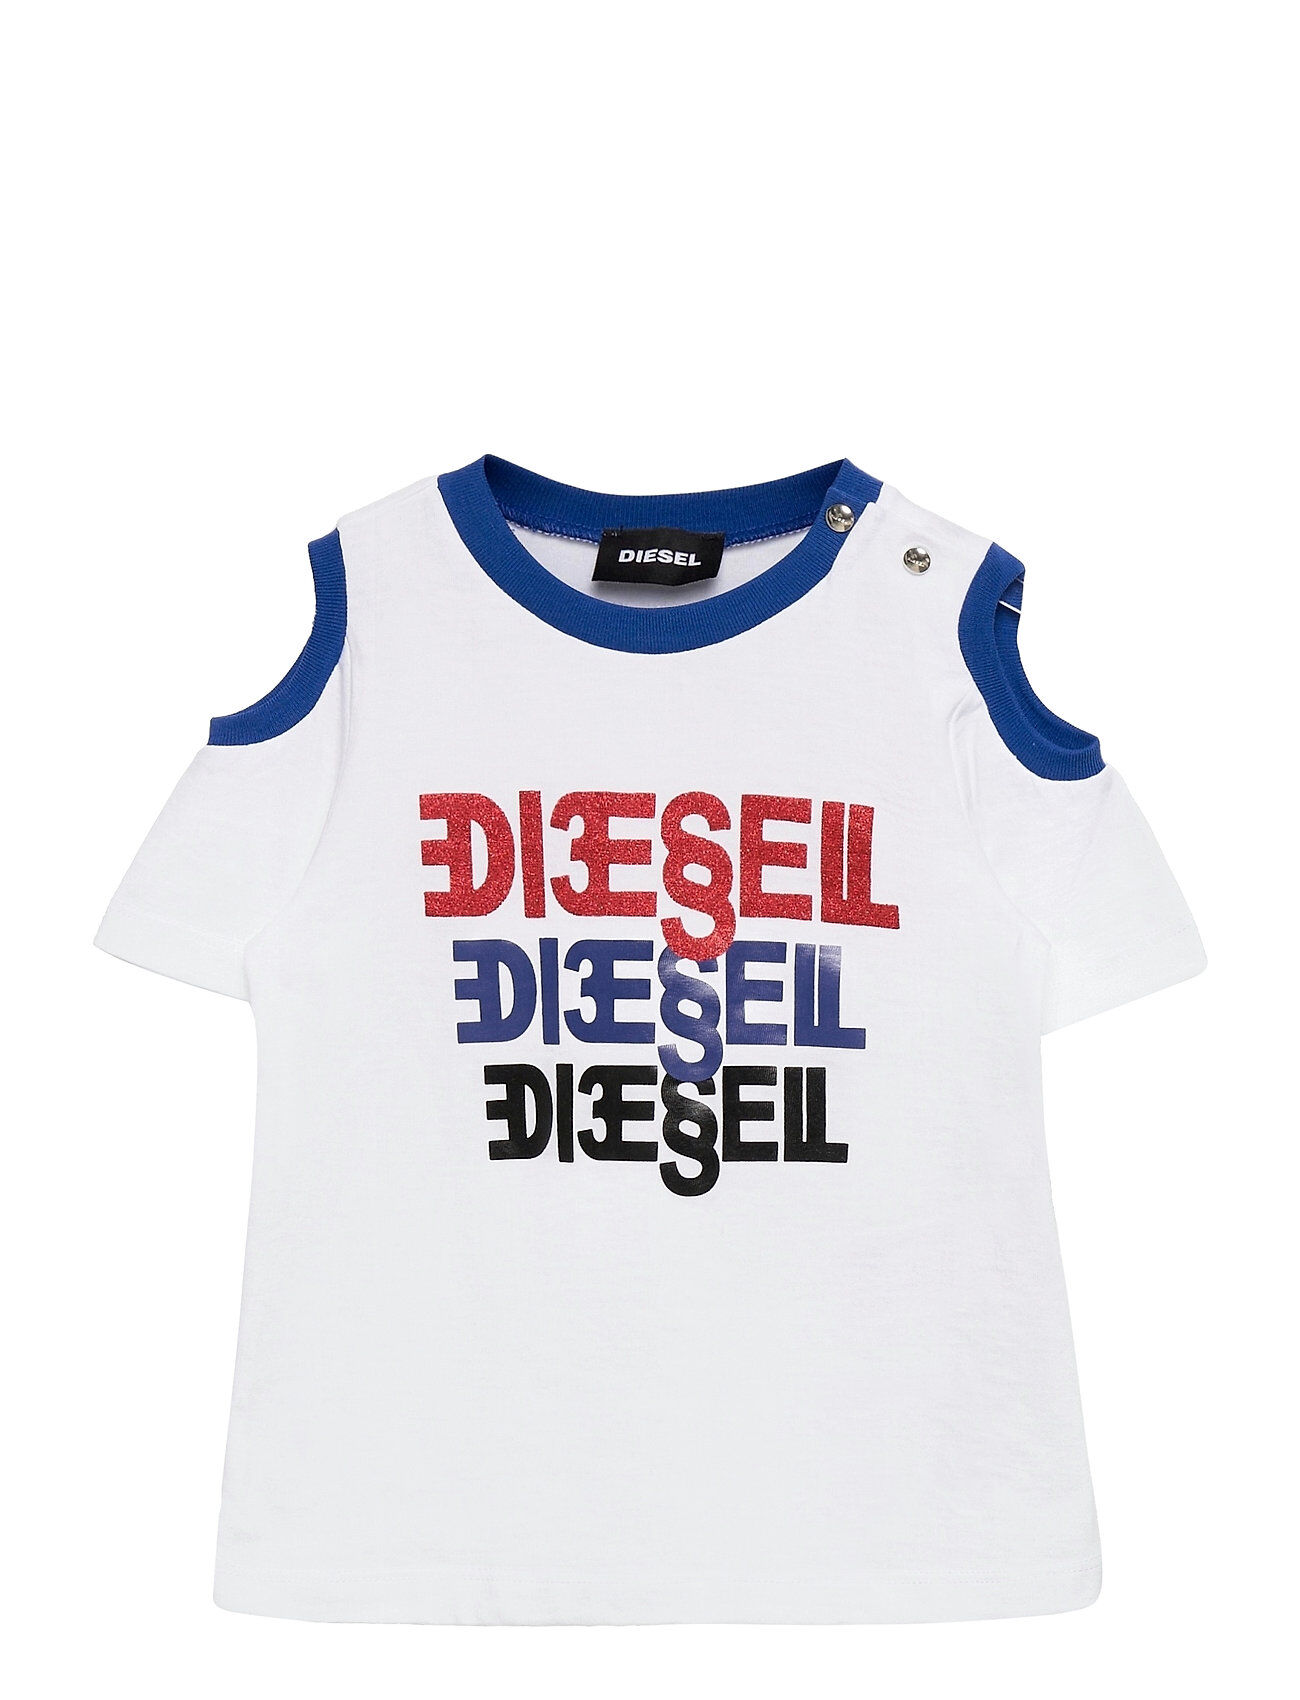 Diesel Taniurab T-Shirt T-shirts Short-sleeved Multi/mønstret Diesel